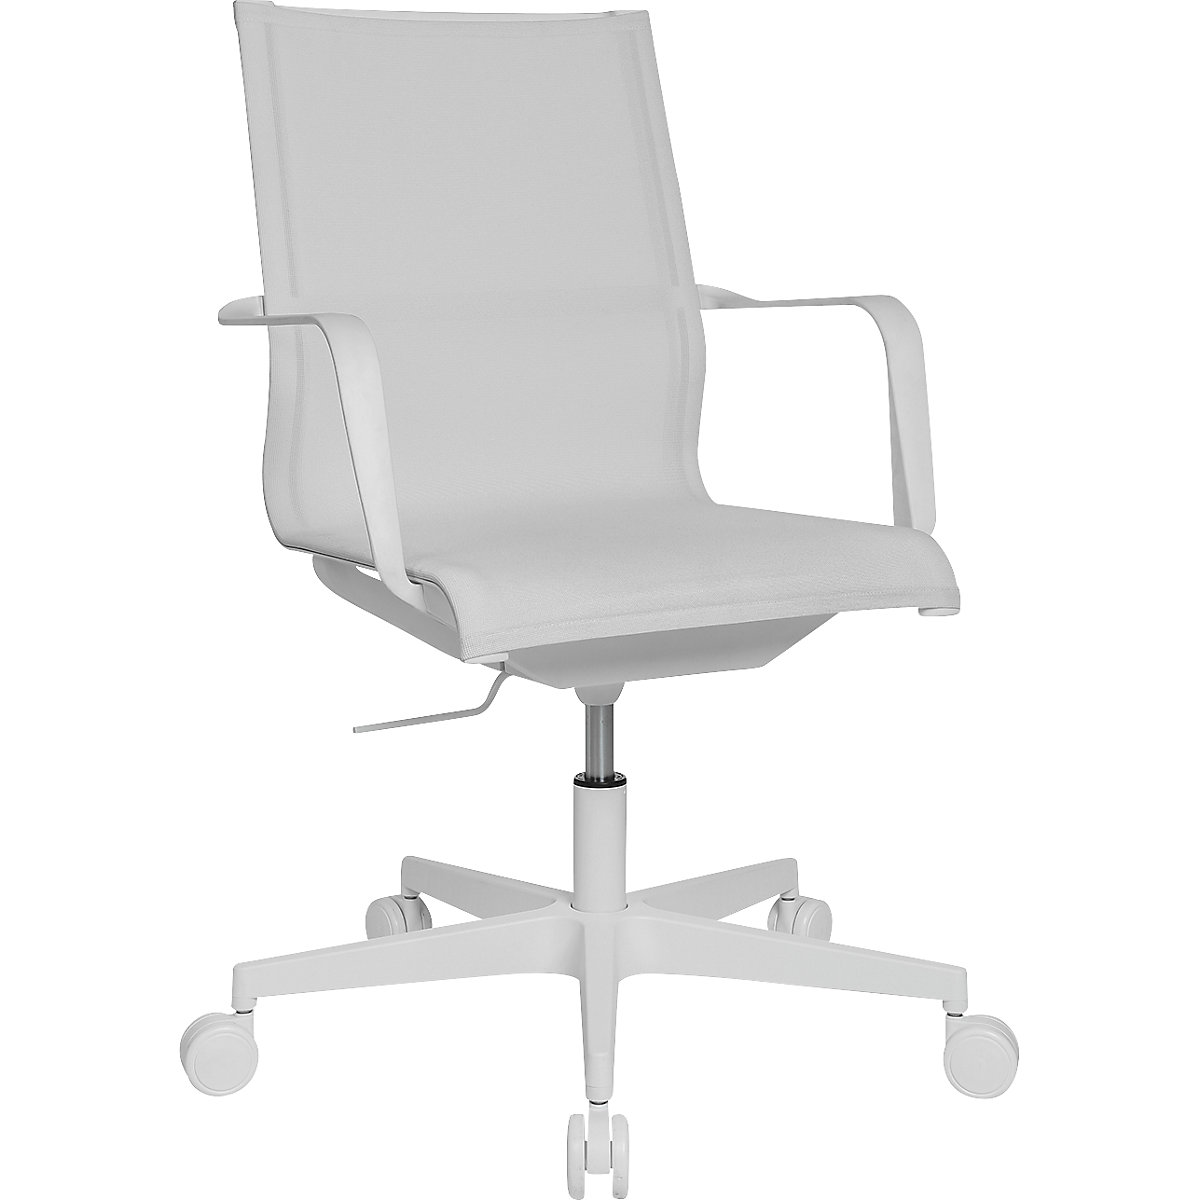 SITNESS LIFE 40 office swivel chair – Topstar